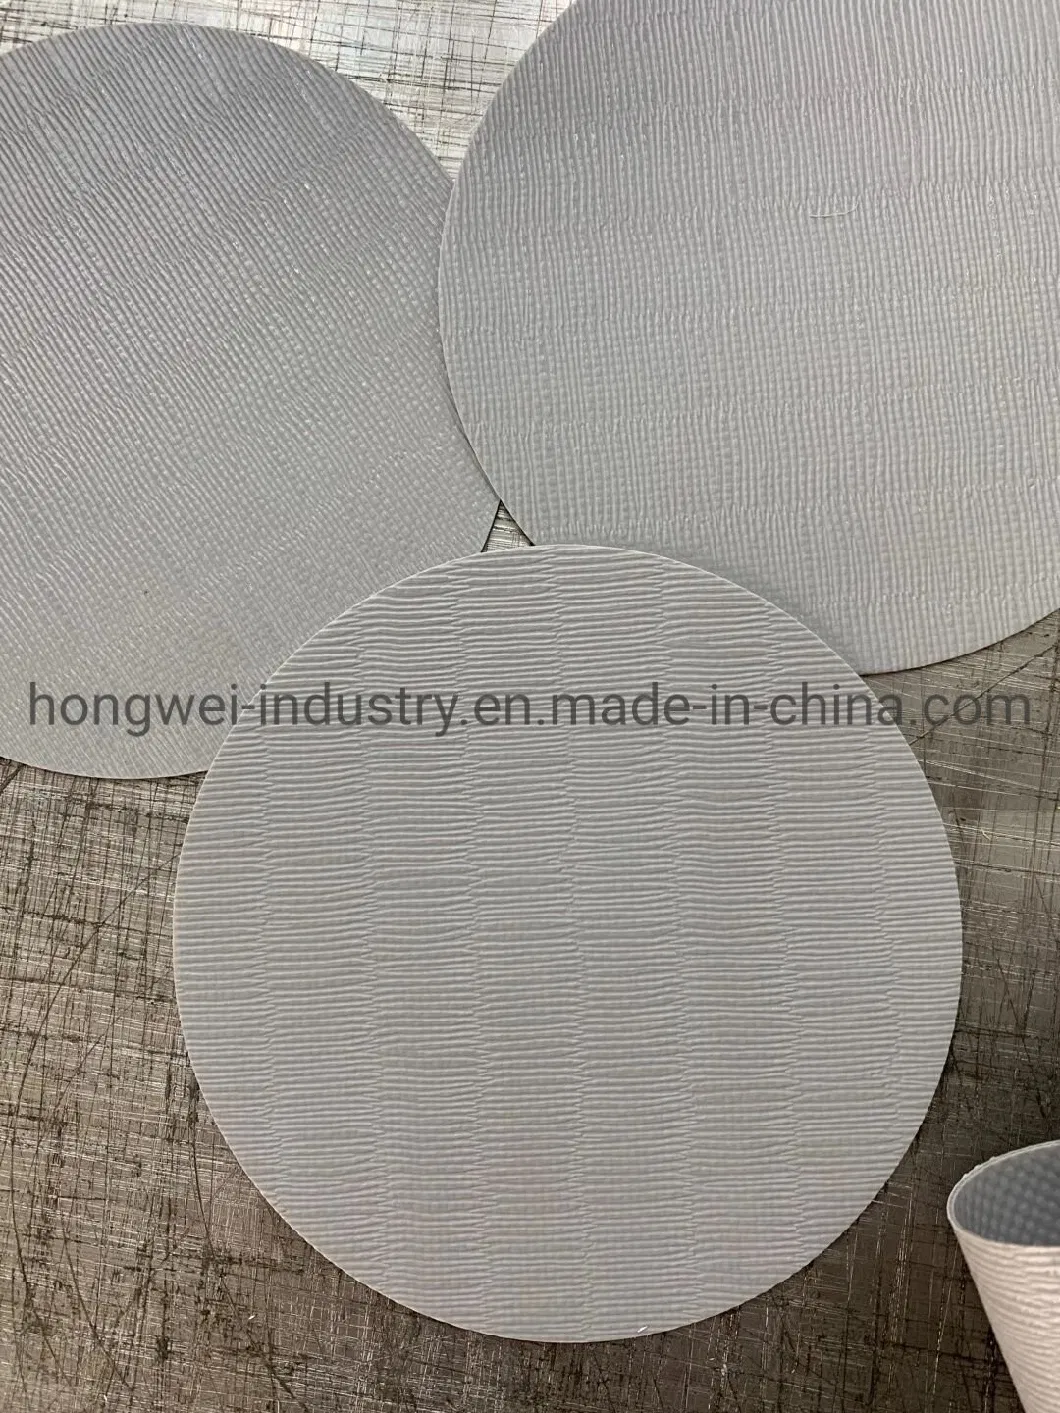 900g Heavy Duty PVC Coated Polyester PVC Panama Tarpualin for Truck Side Curtain